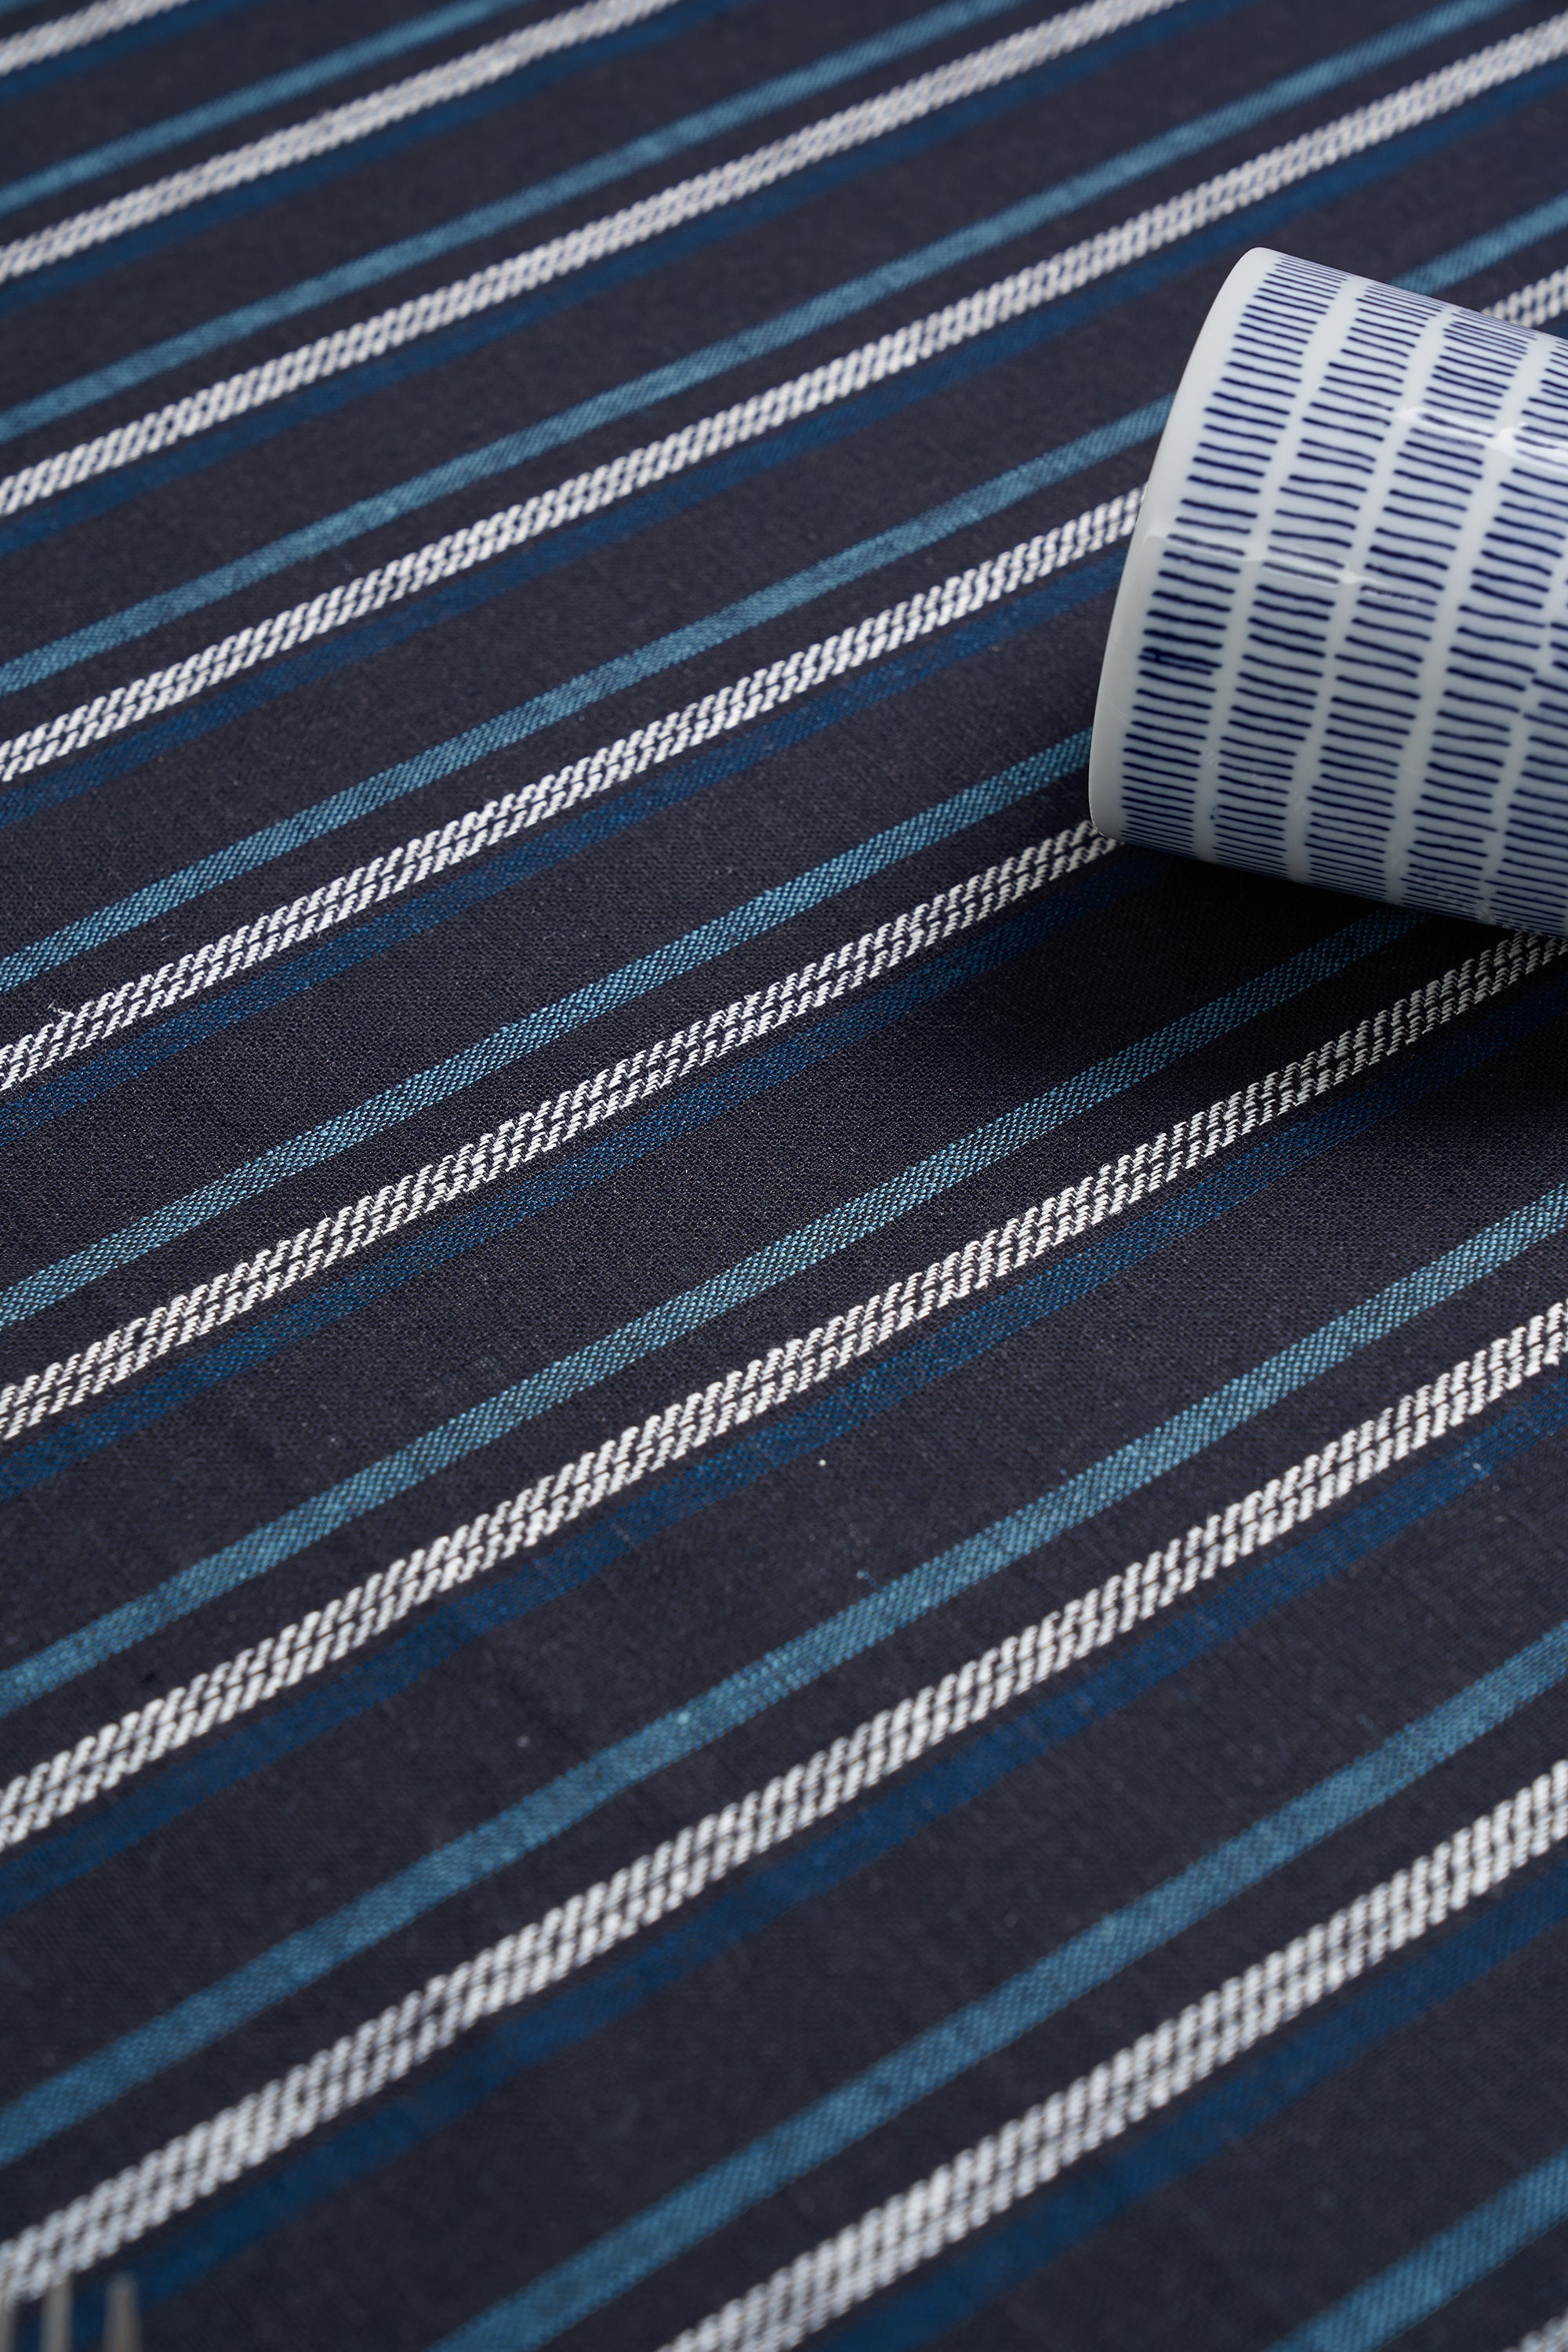 Han&Co. Table Cloth – Linen Stripe ผ้าปูโต๊ะ ผ้าคลุมโต๊ะ สี Linen Stripe HCTBC09